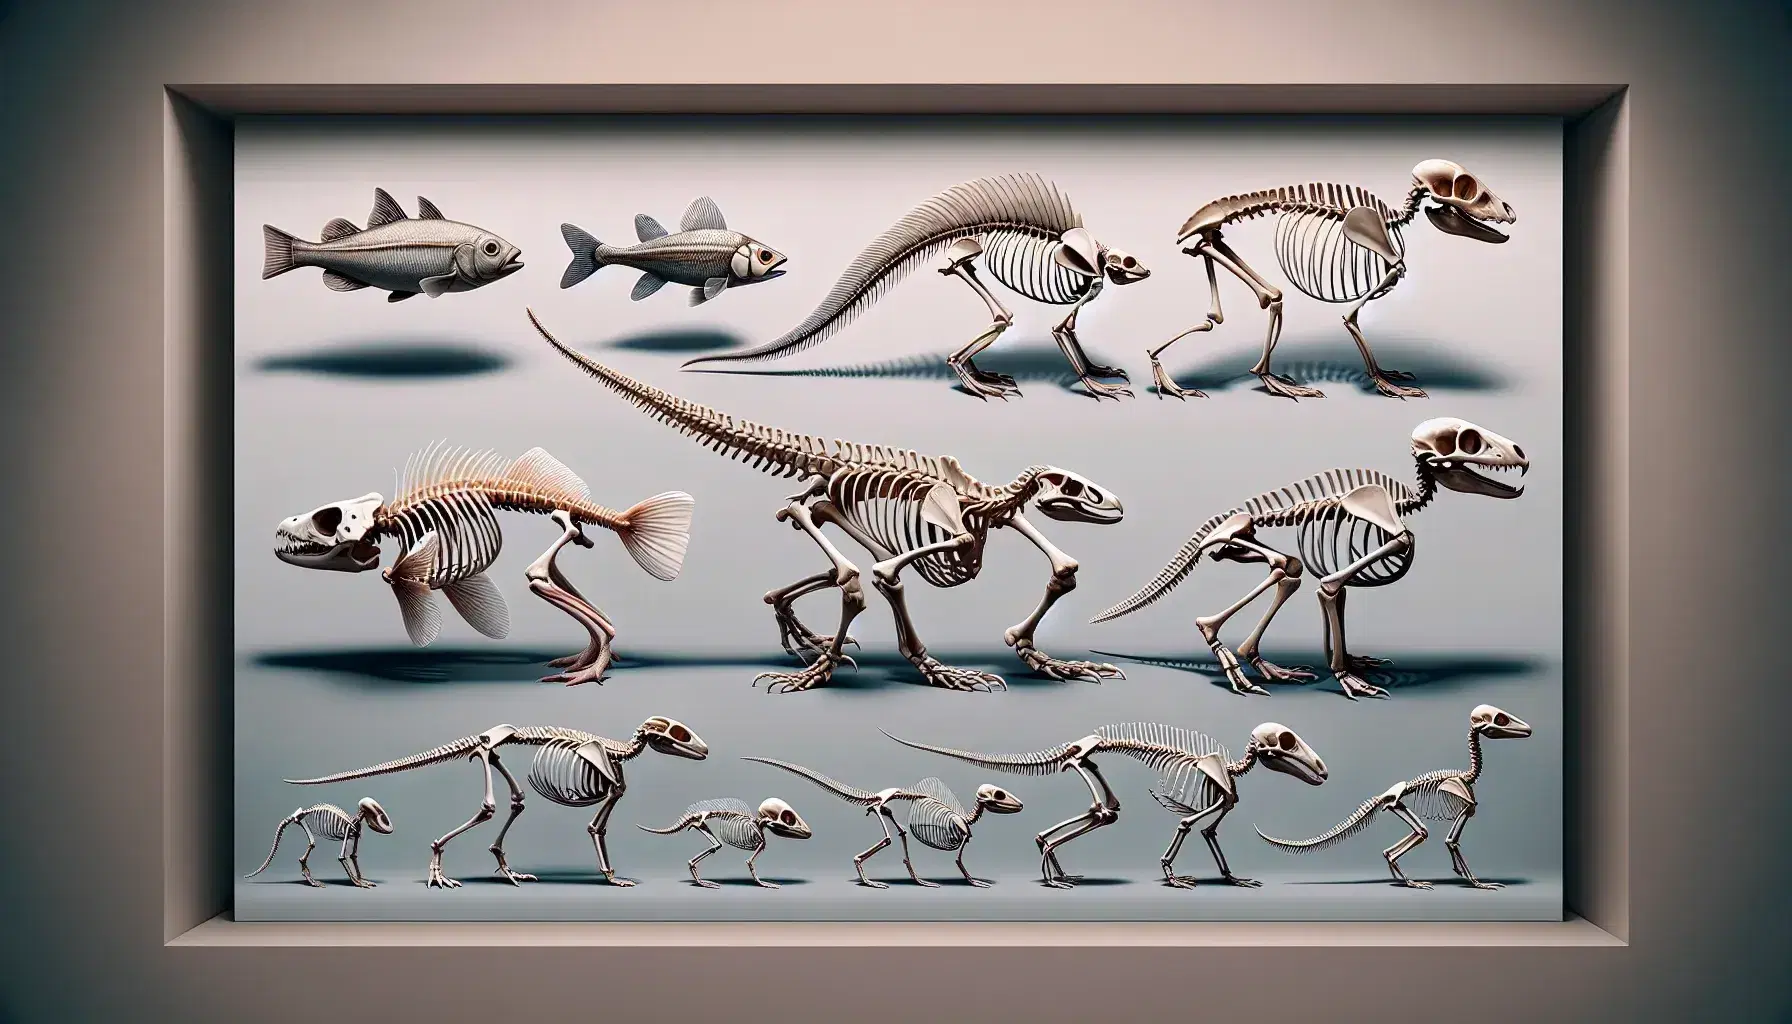 Esqueletos de animales en secuencia evolutiva, desde un pez hasta un mamífero cuadrúpedo, destacando diferencias anatómicas en un fondo neutro.